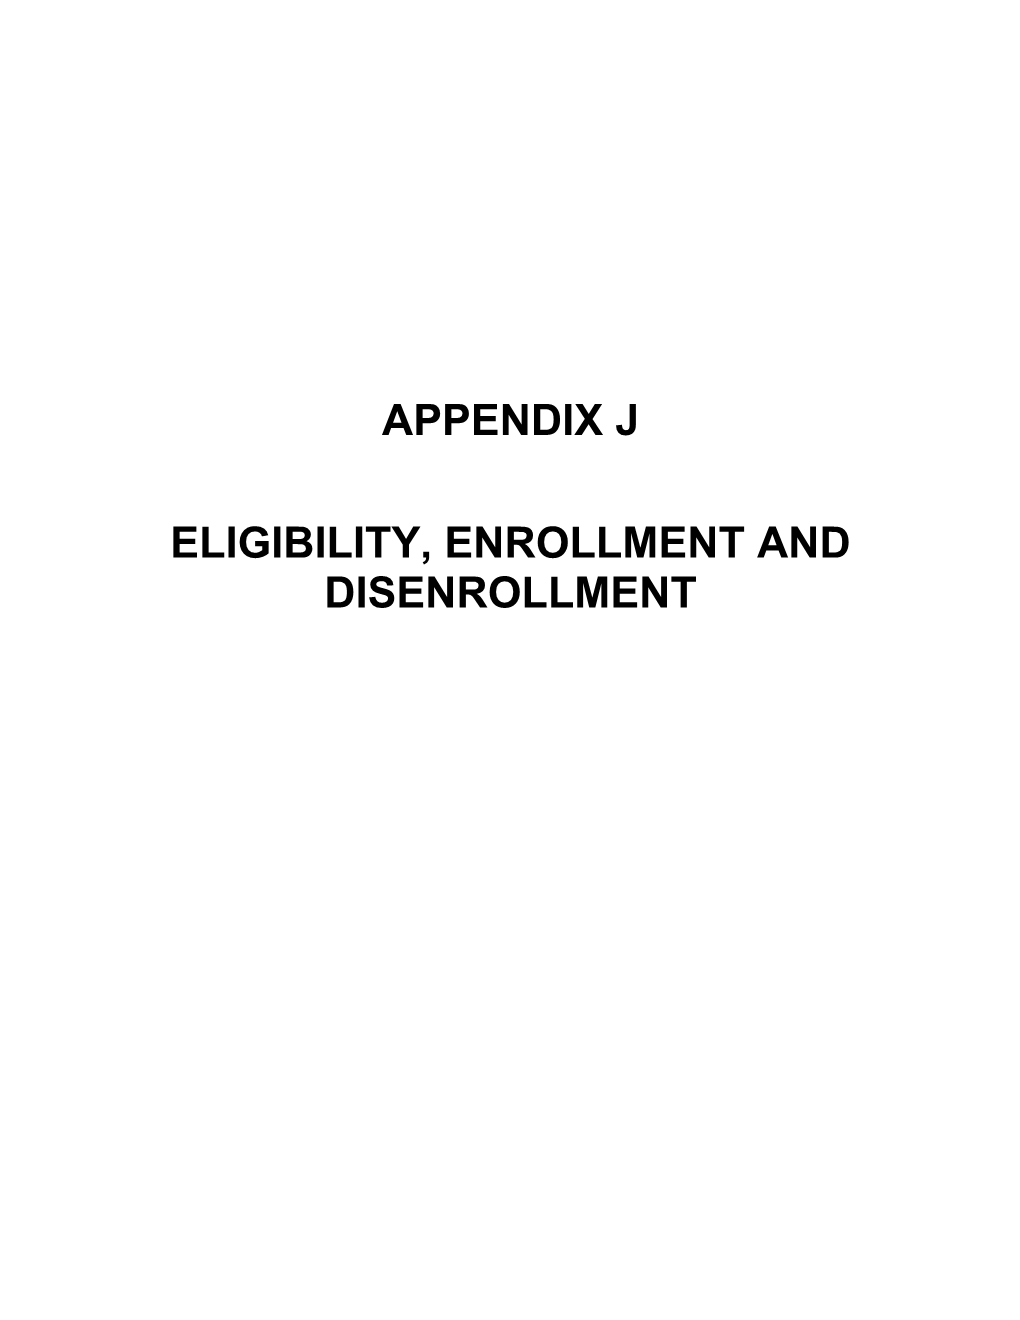 Eligibility, Enrollment and Disenrollment